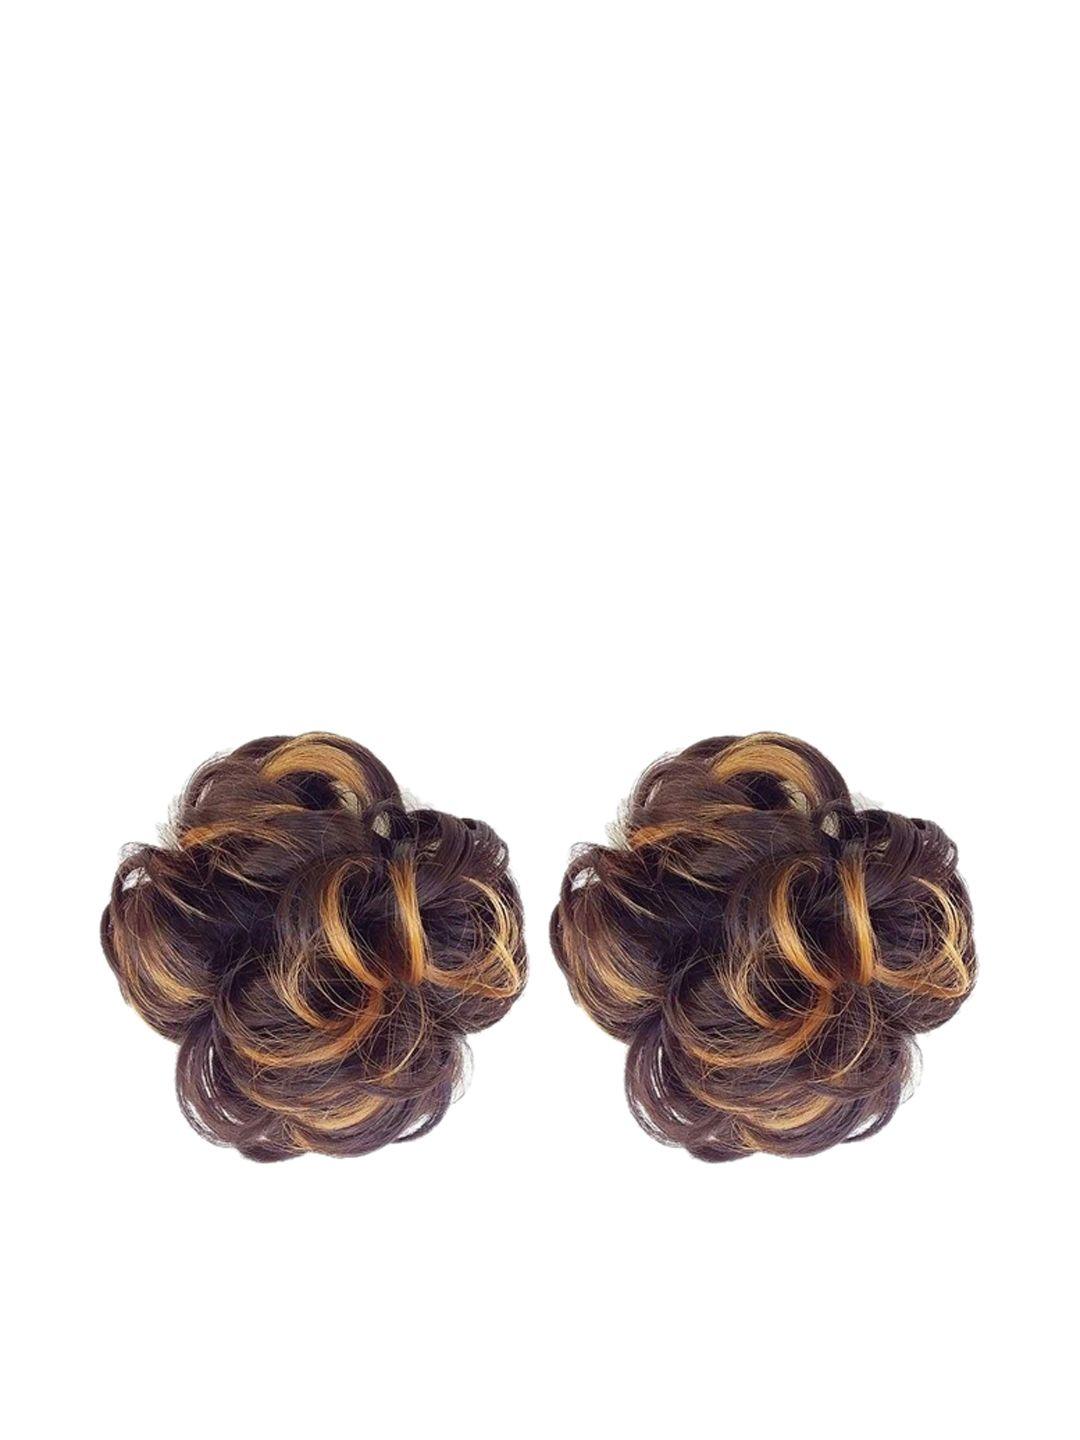 chronex set of 2 highlighter hair extension-clutcher juda